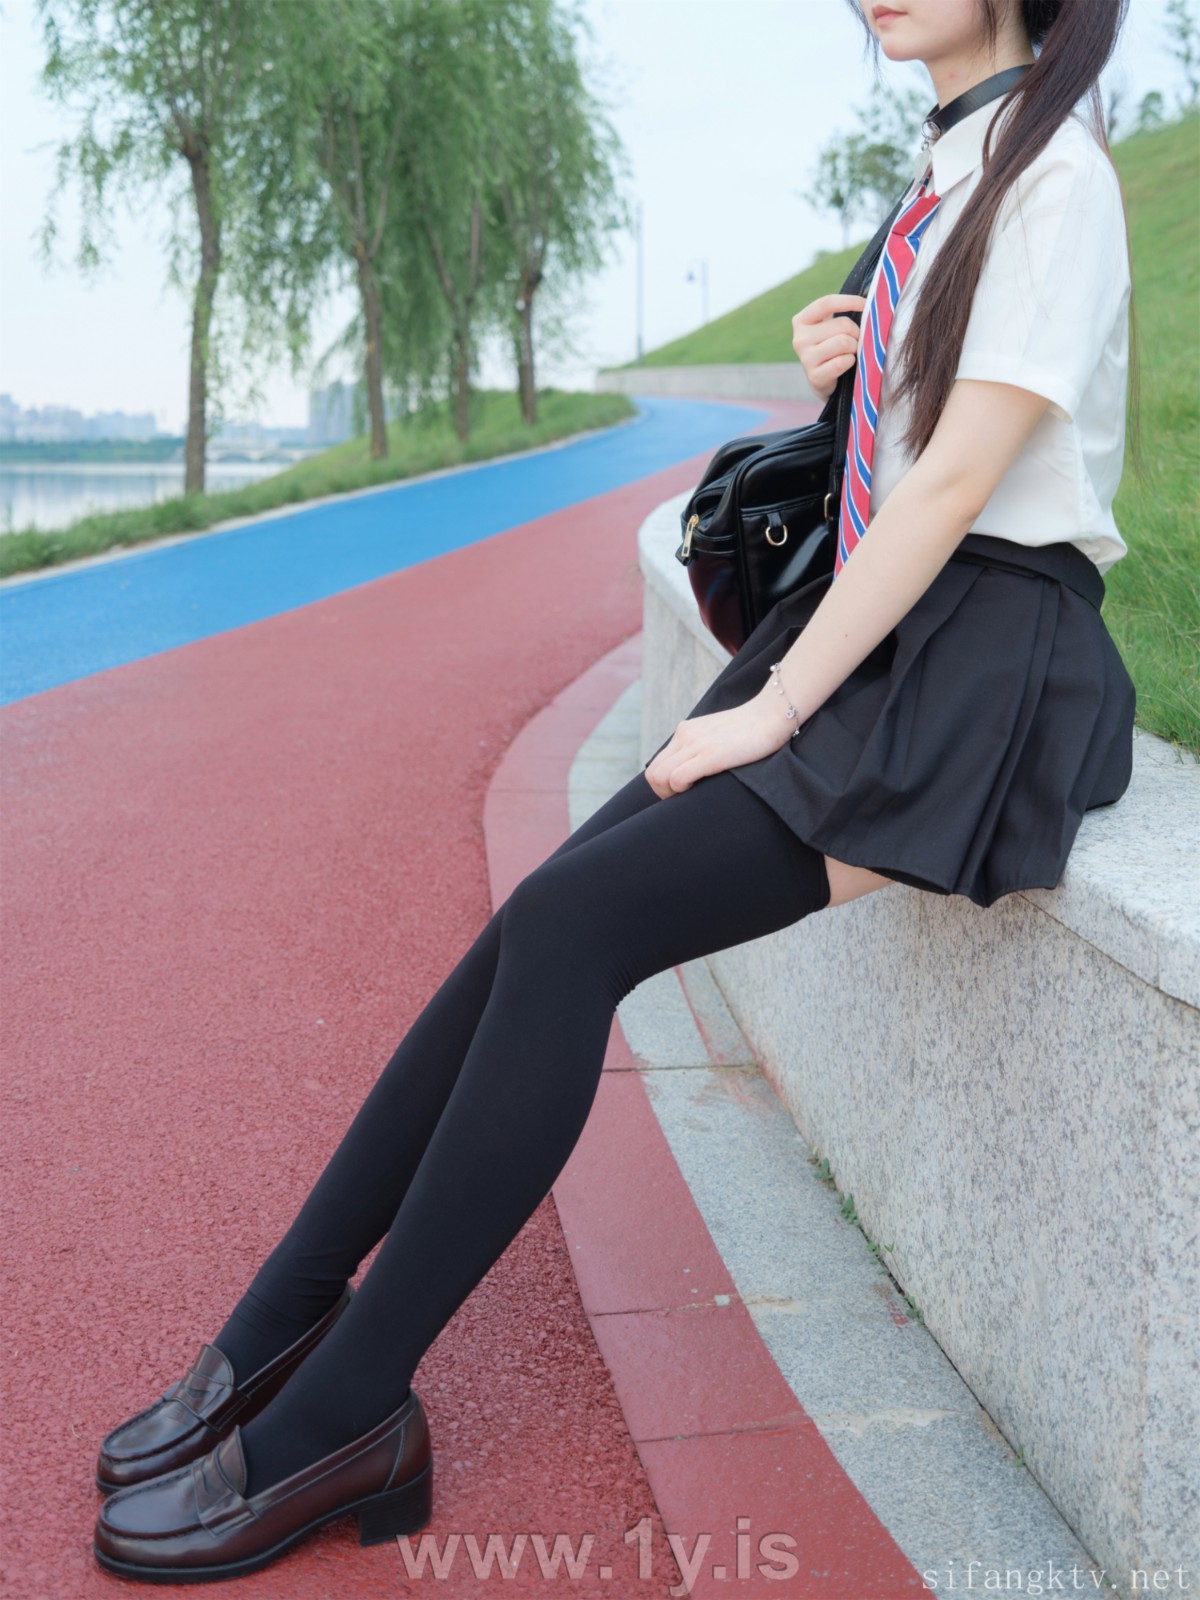 The Tender girl in black stockings Outdoor Exposure-1 (9)